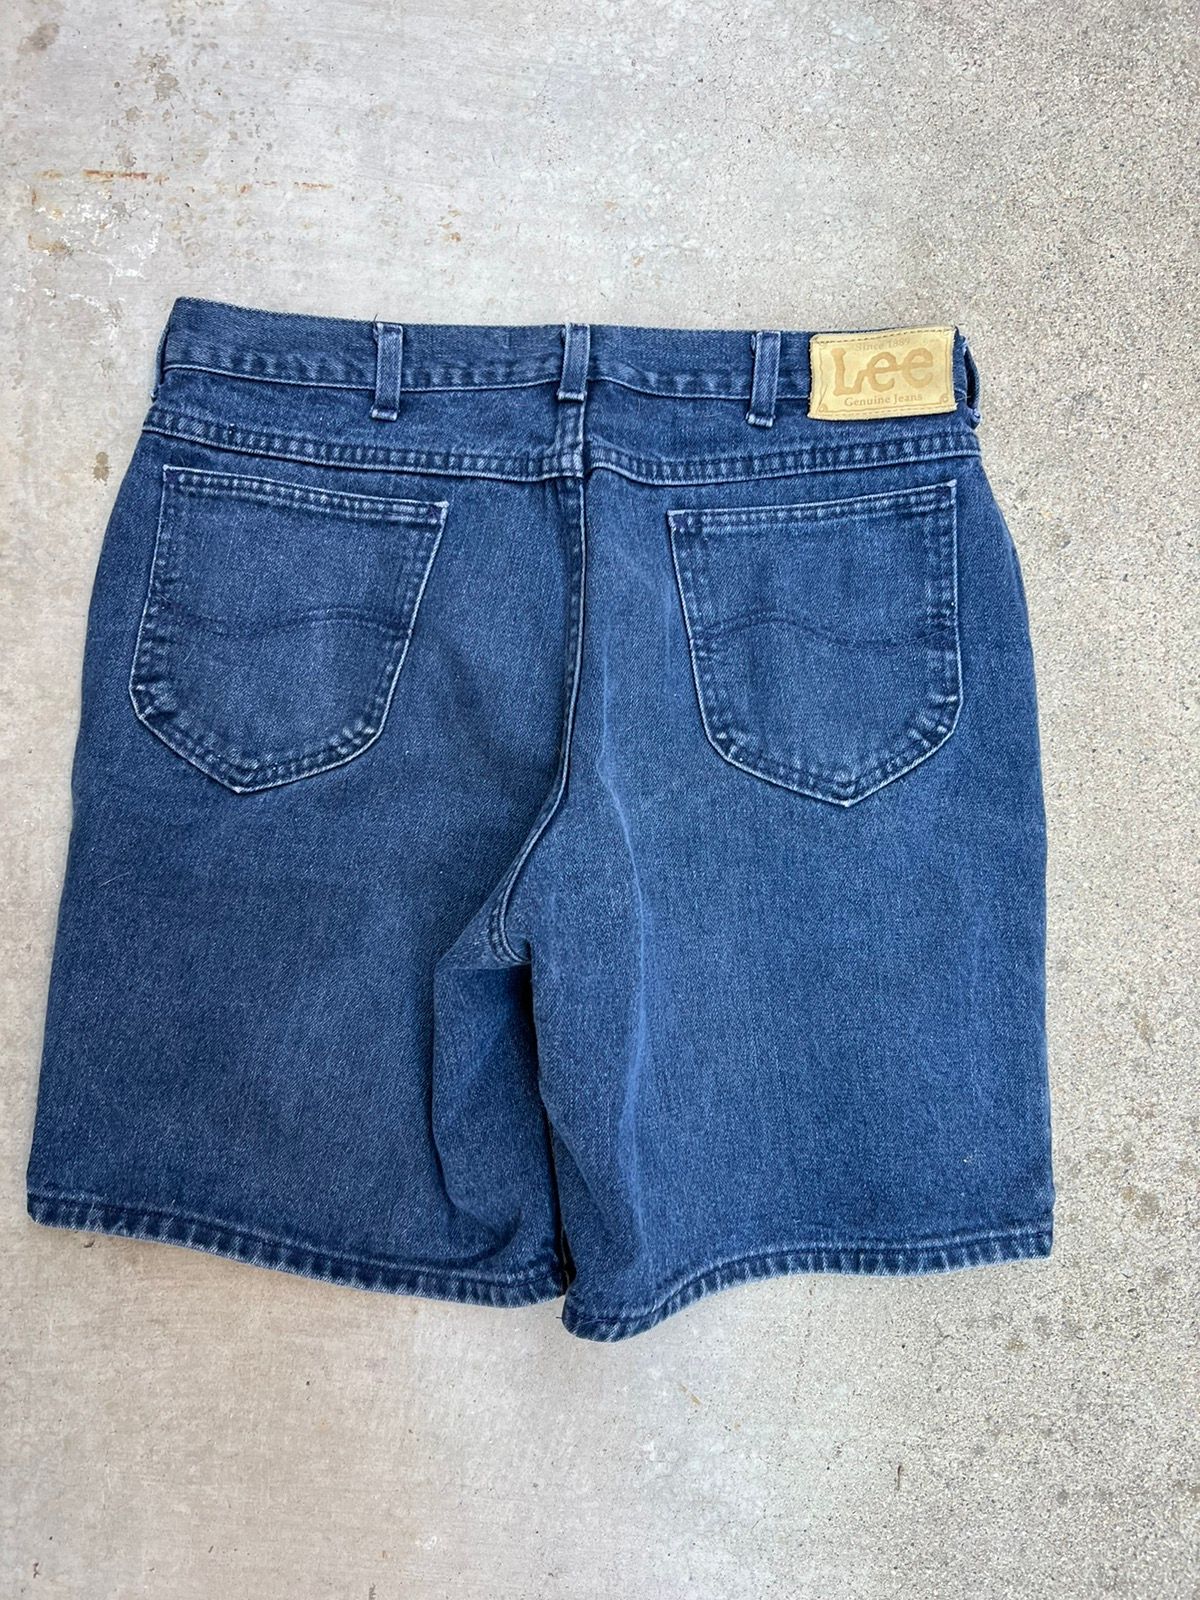 Vintage Vintage 90s faded Lee shorts Size US 34 / EU 50 - 1 Preview